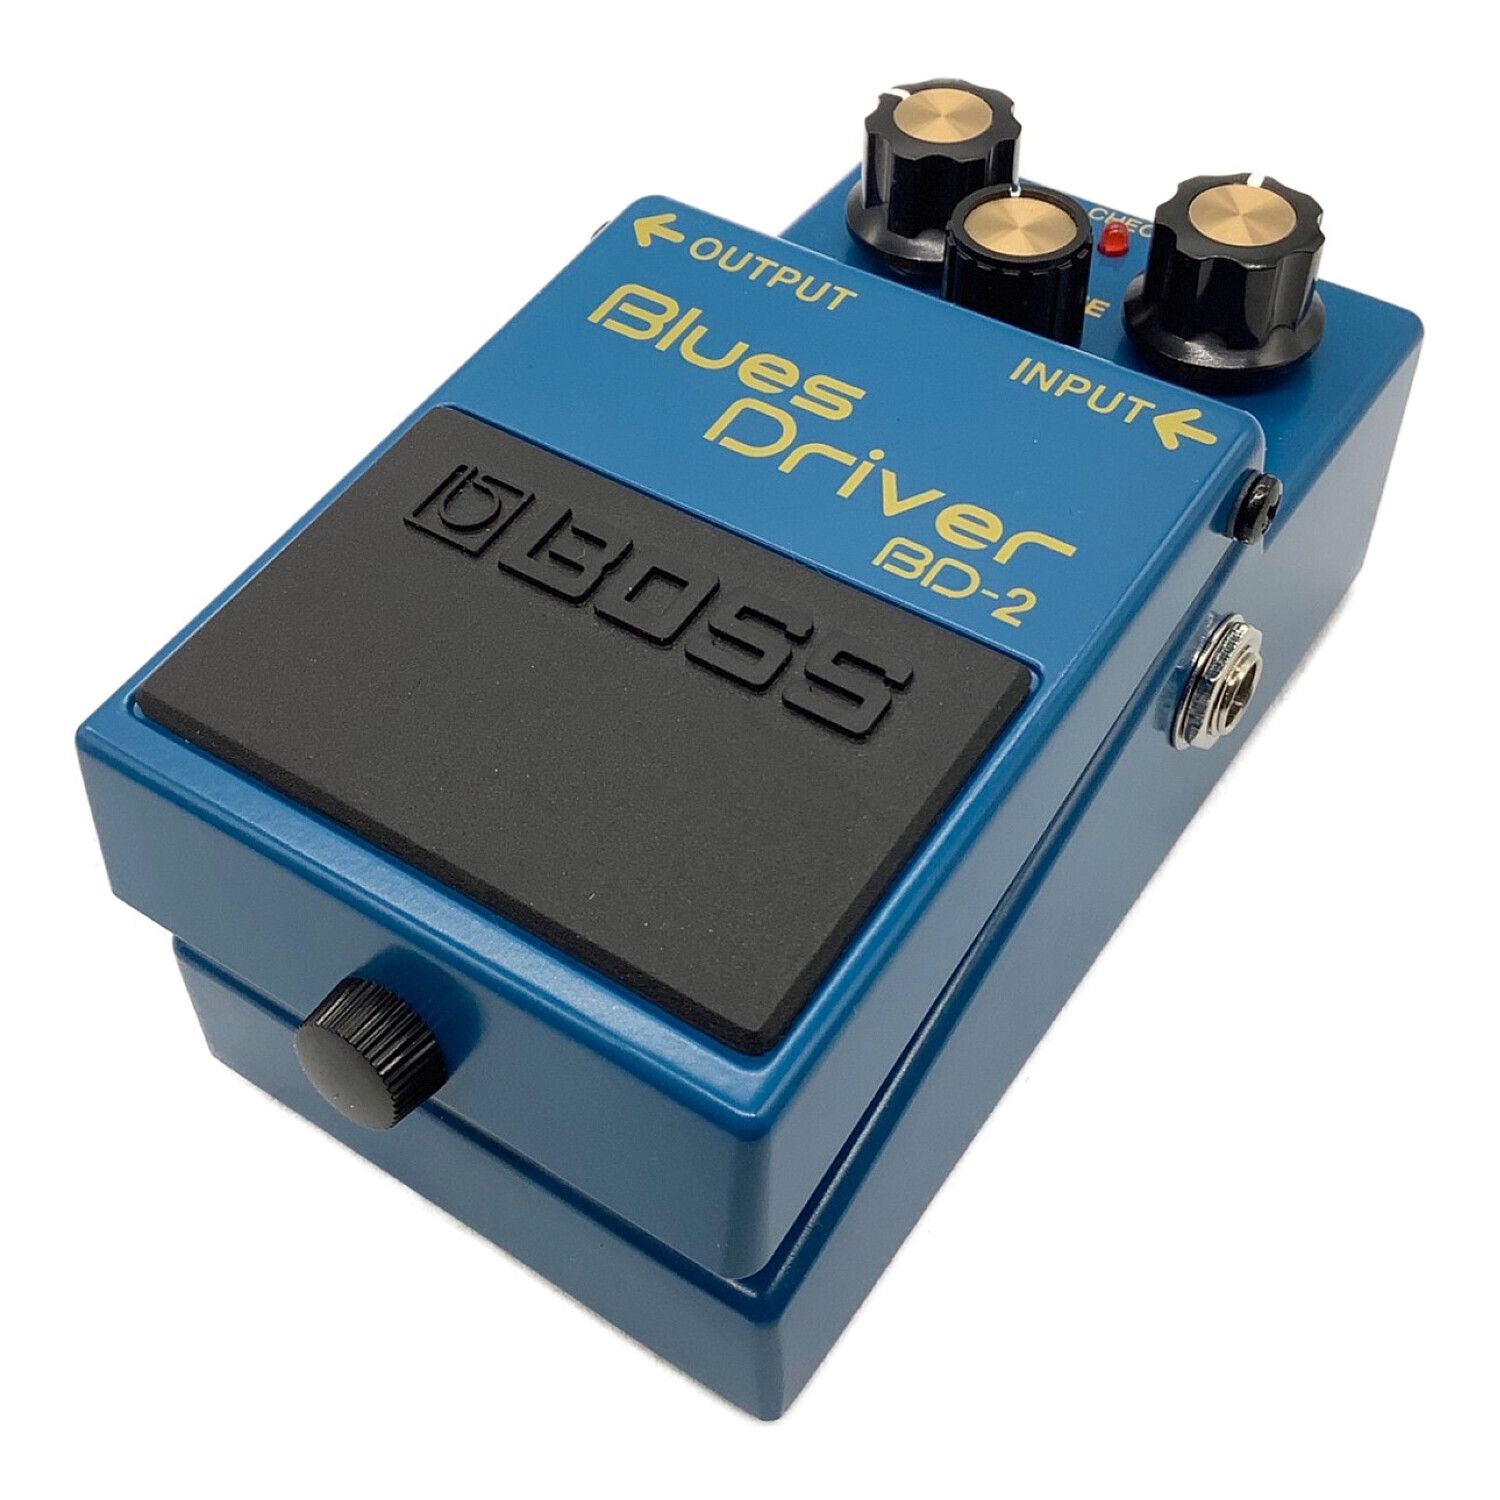 BOSS Blues Driver BD-2 ギター　エフェクター